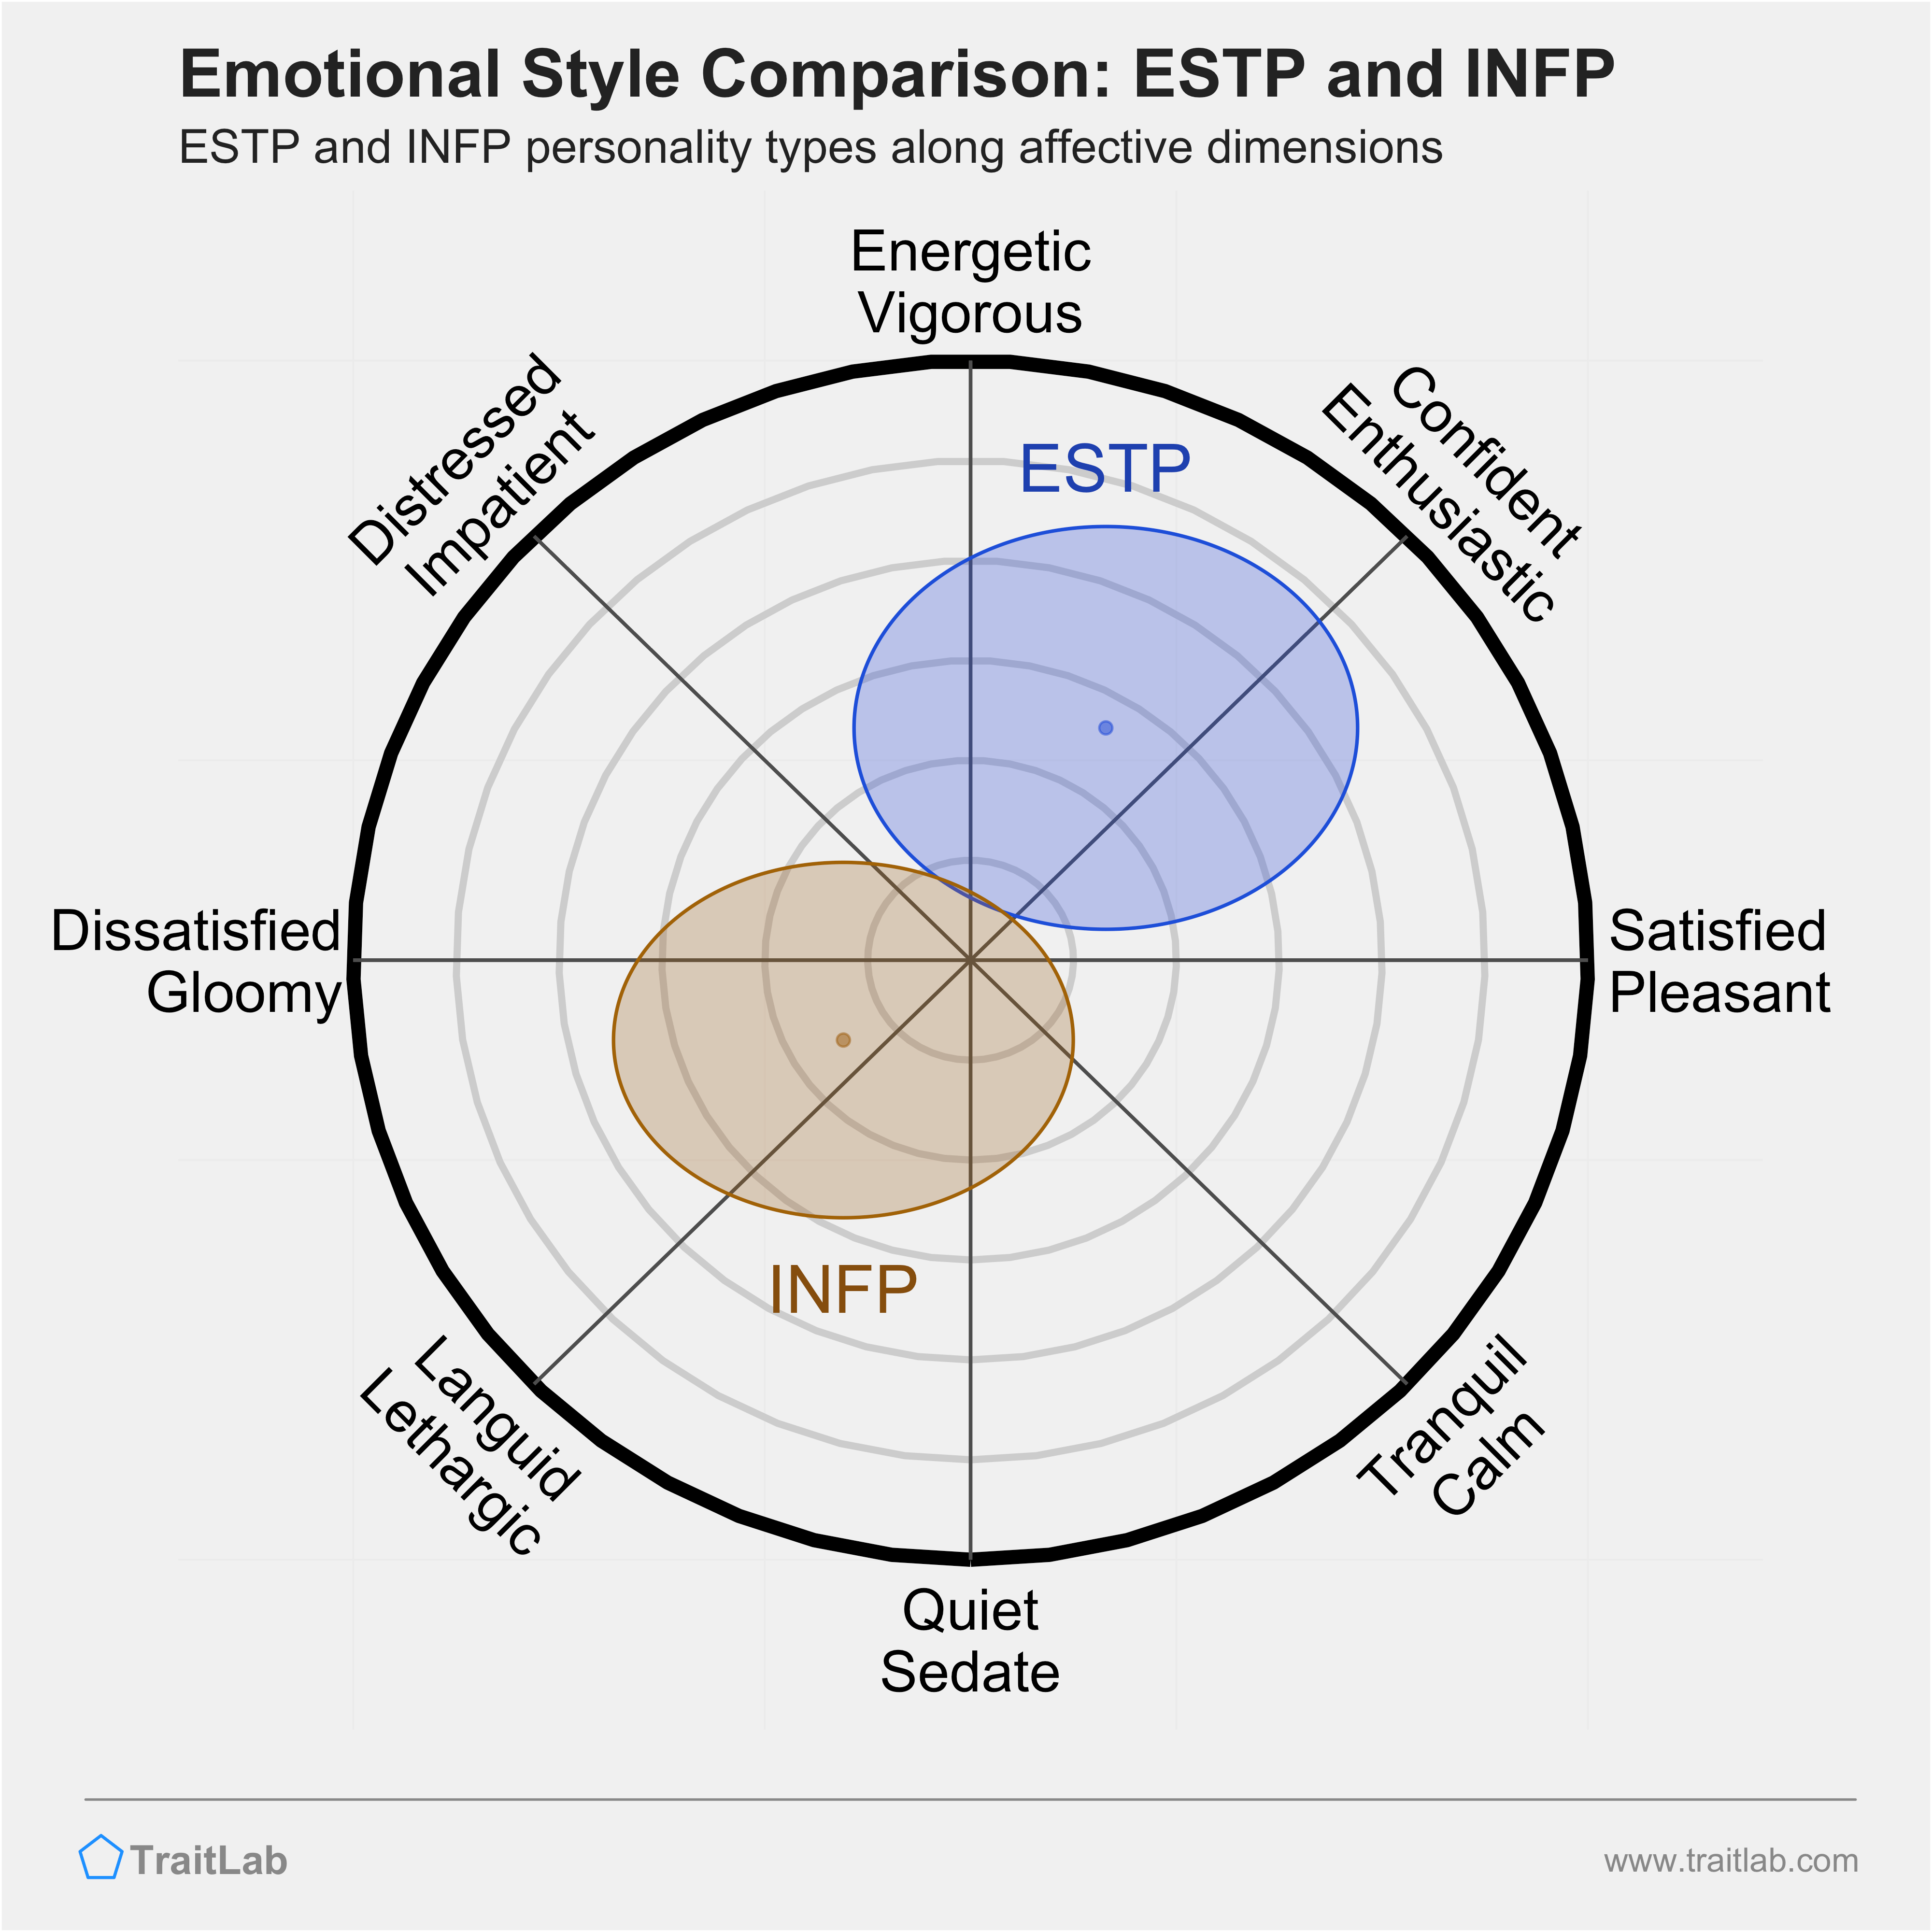 ESTP and INFP comparison across emotional (affective) dimensions